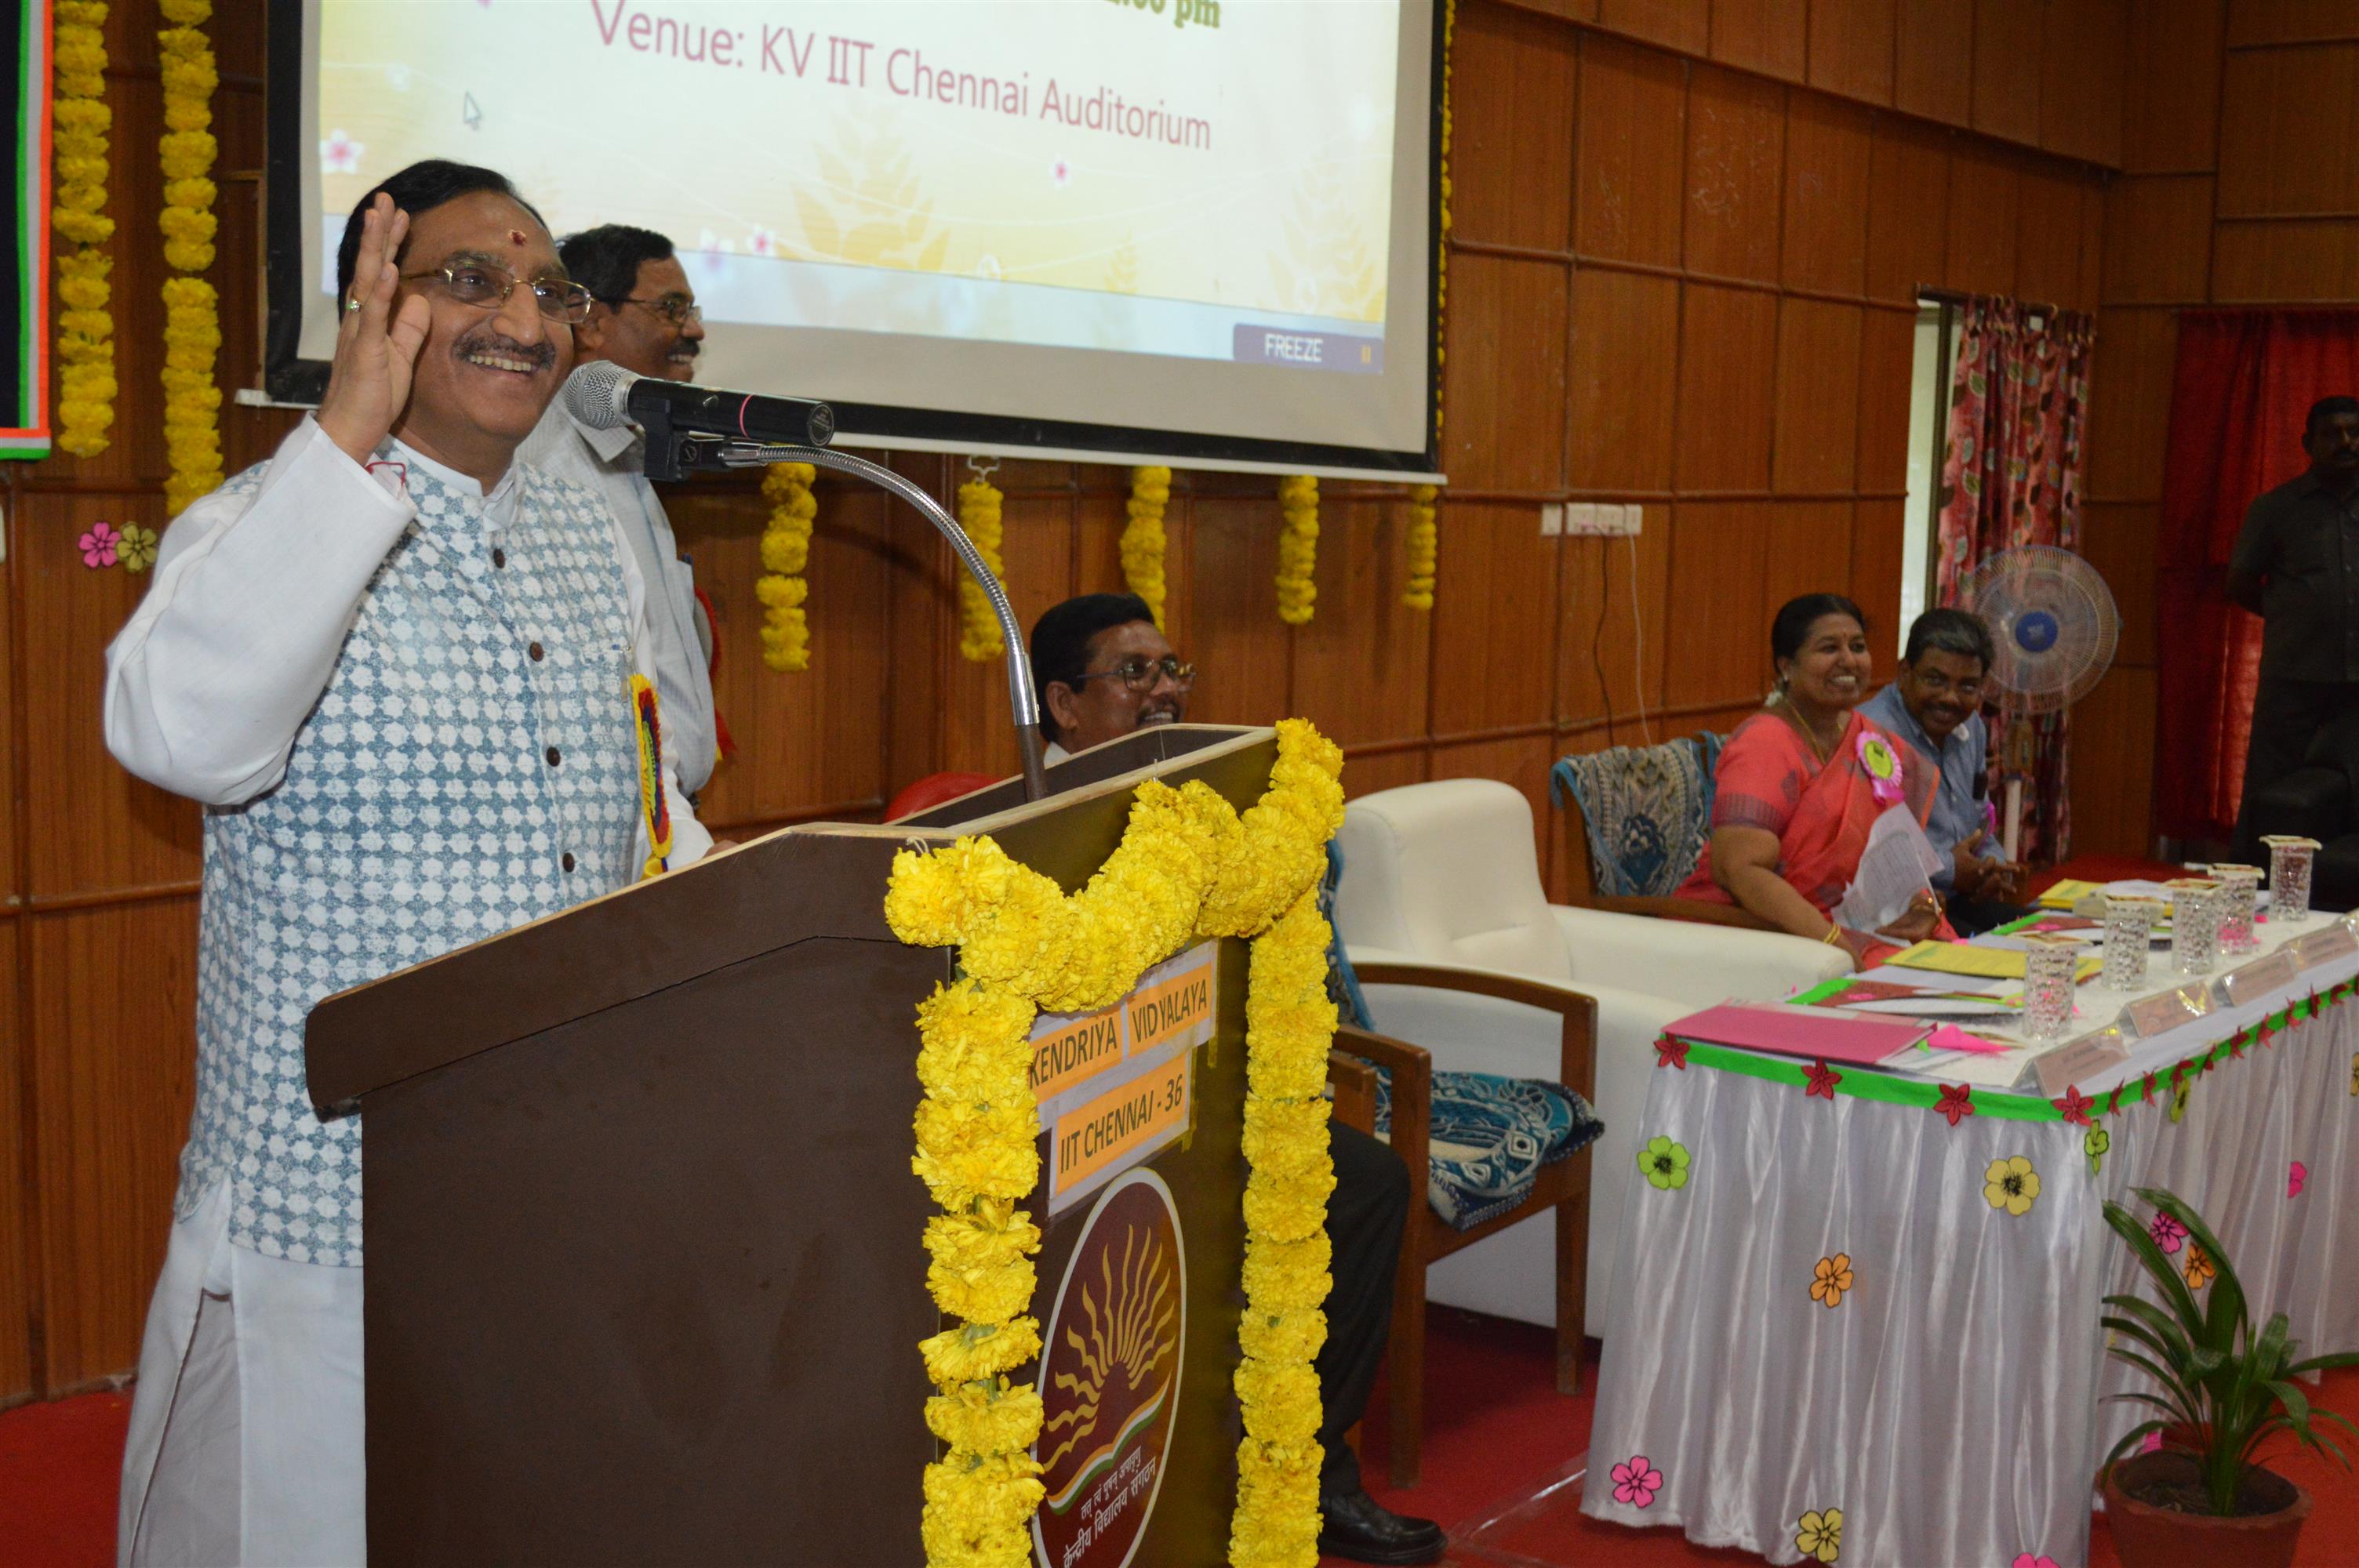 Shri Ramesh Pokhriyal Nishank, Union Minister of Human Resource Development is addressing the students, teachers and officials of the Kendriya Vidyalaya in the KV IIT Campus, Chennai today (30.09.19).